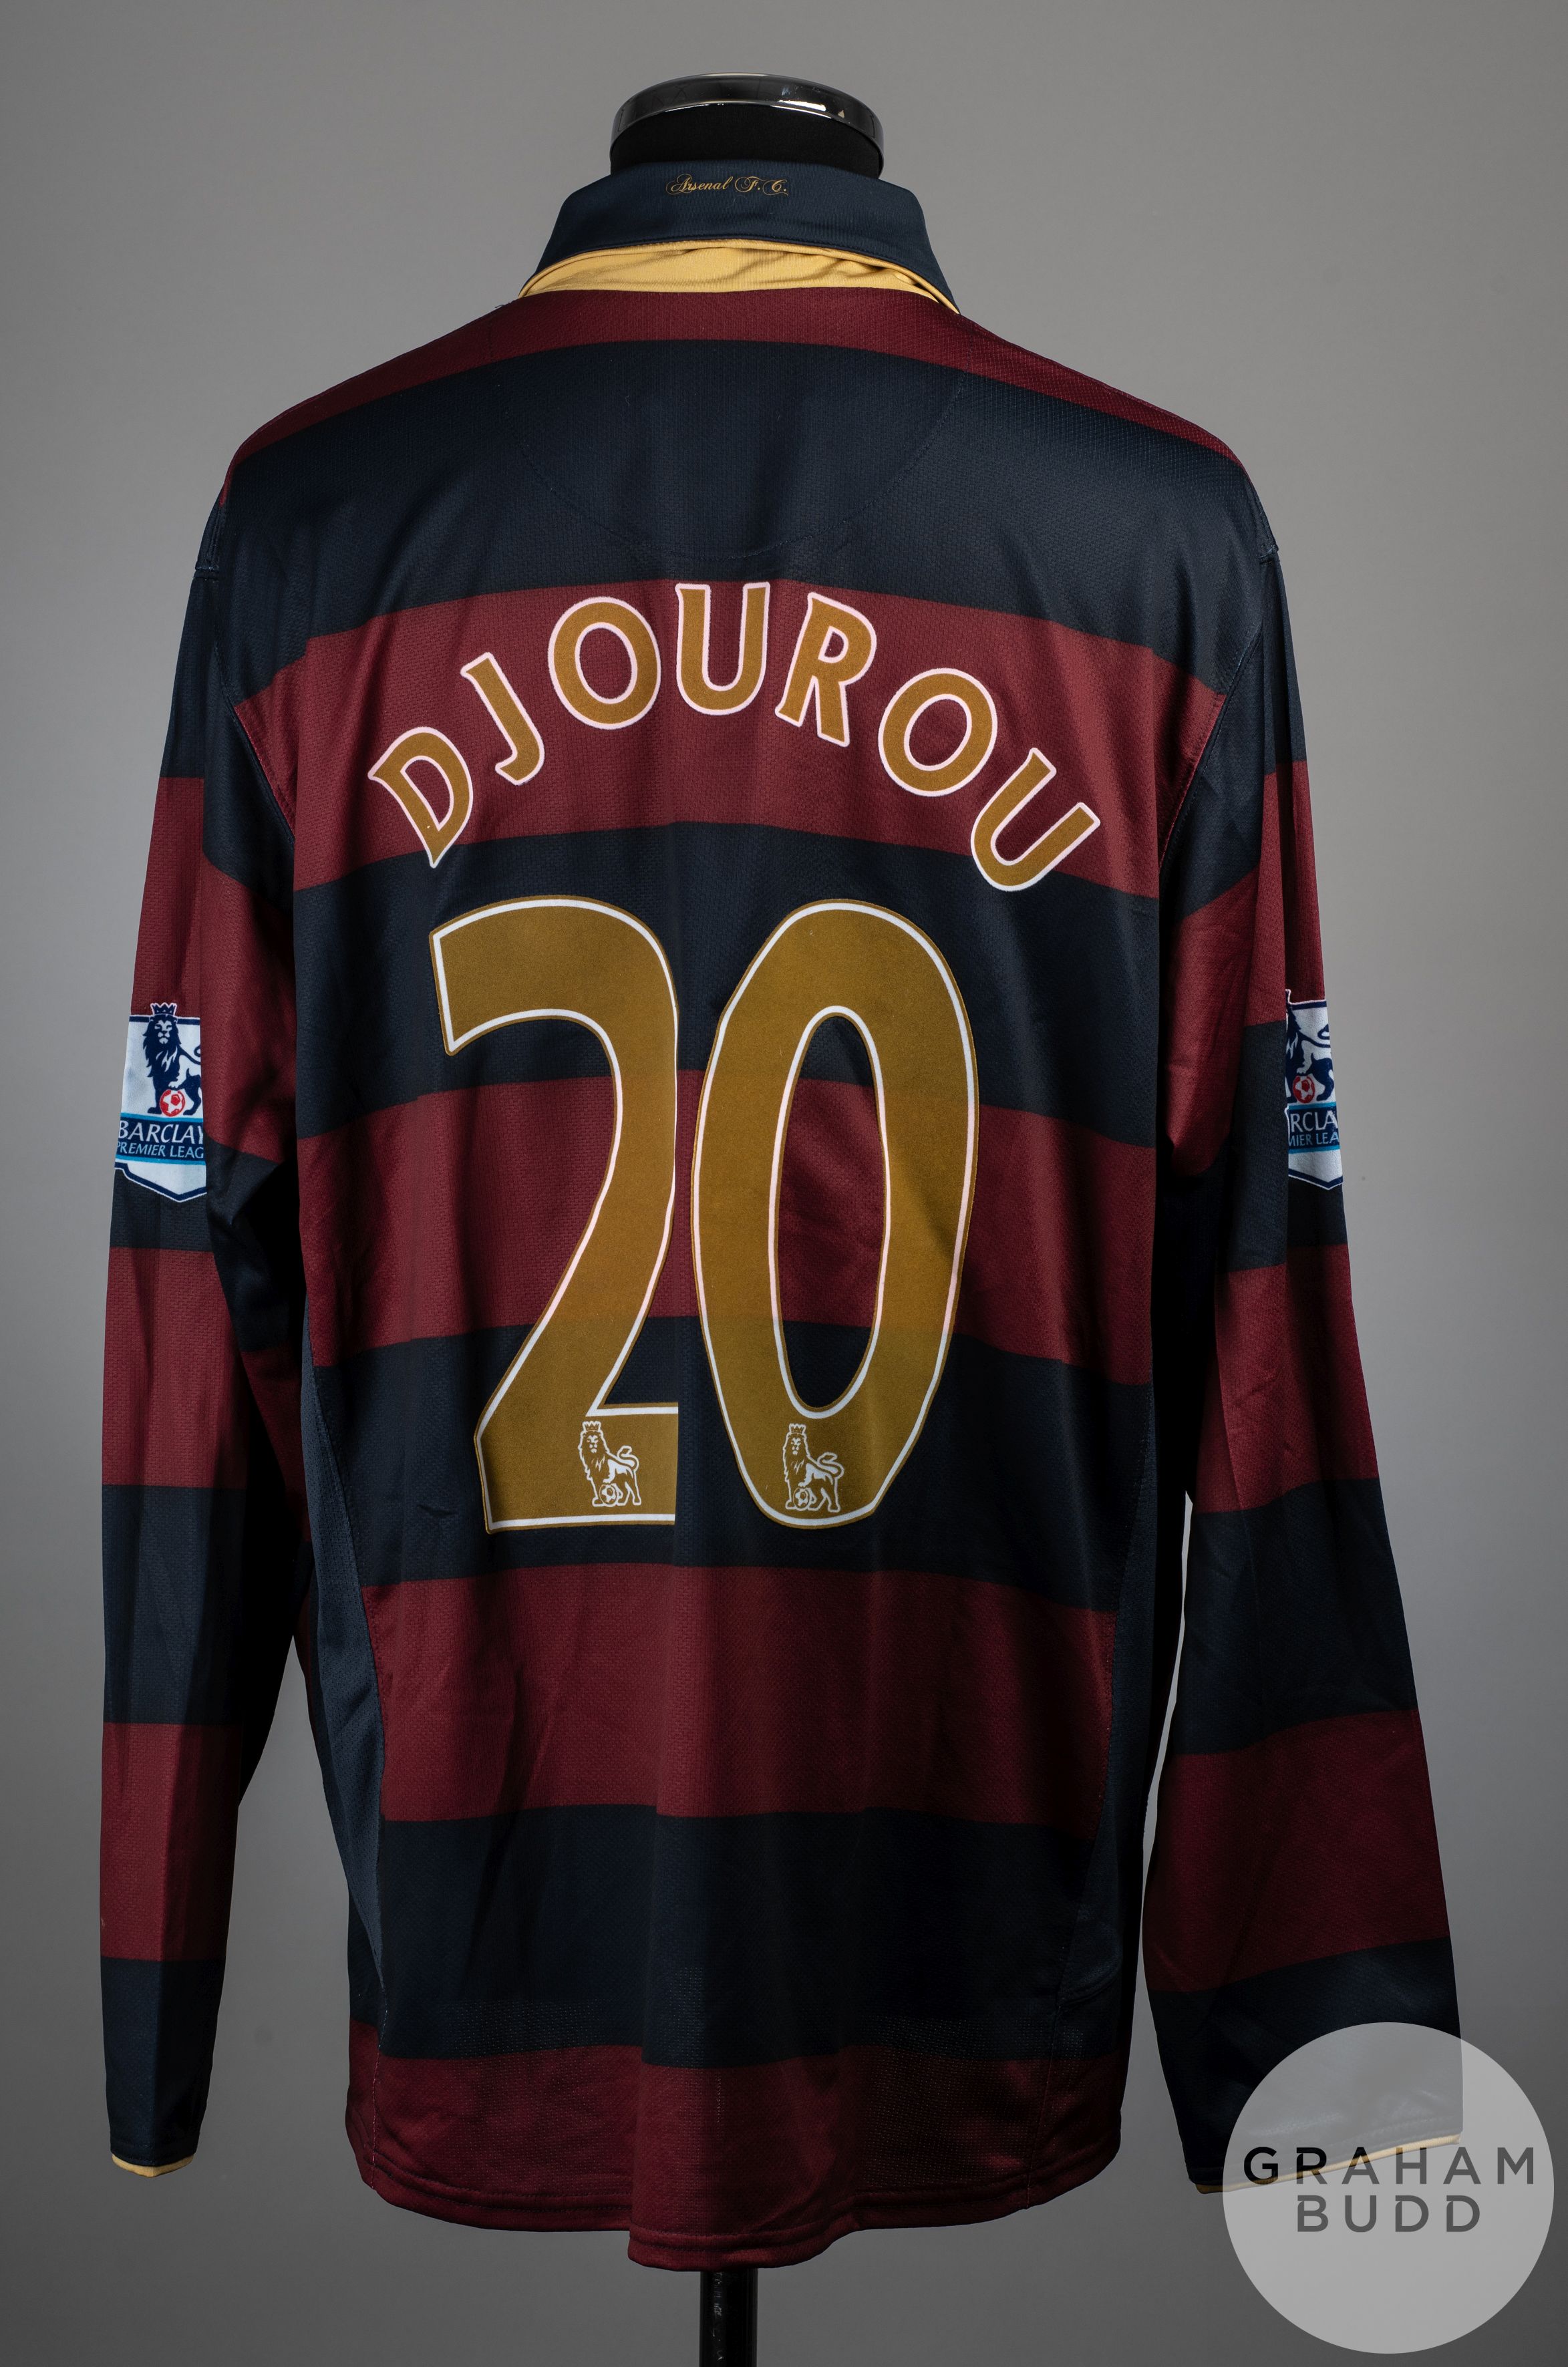 Johan Djourou blackcurrent and blue No.20 Arsenal 3rd kit shirt, 2007-08, Nike, XL - Image 2 of 2